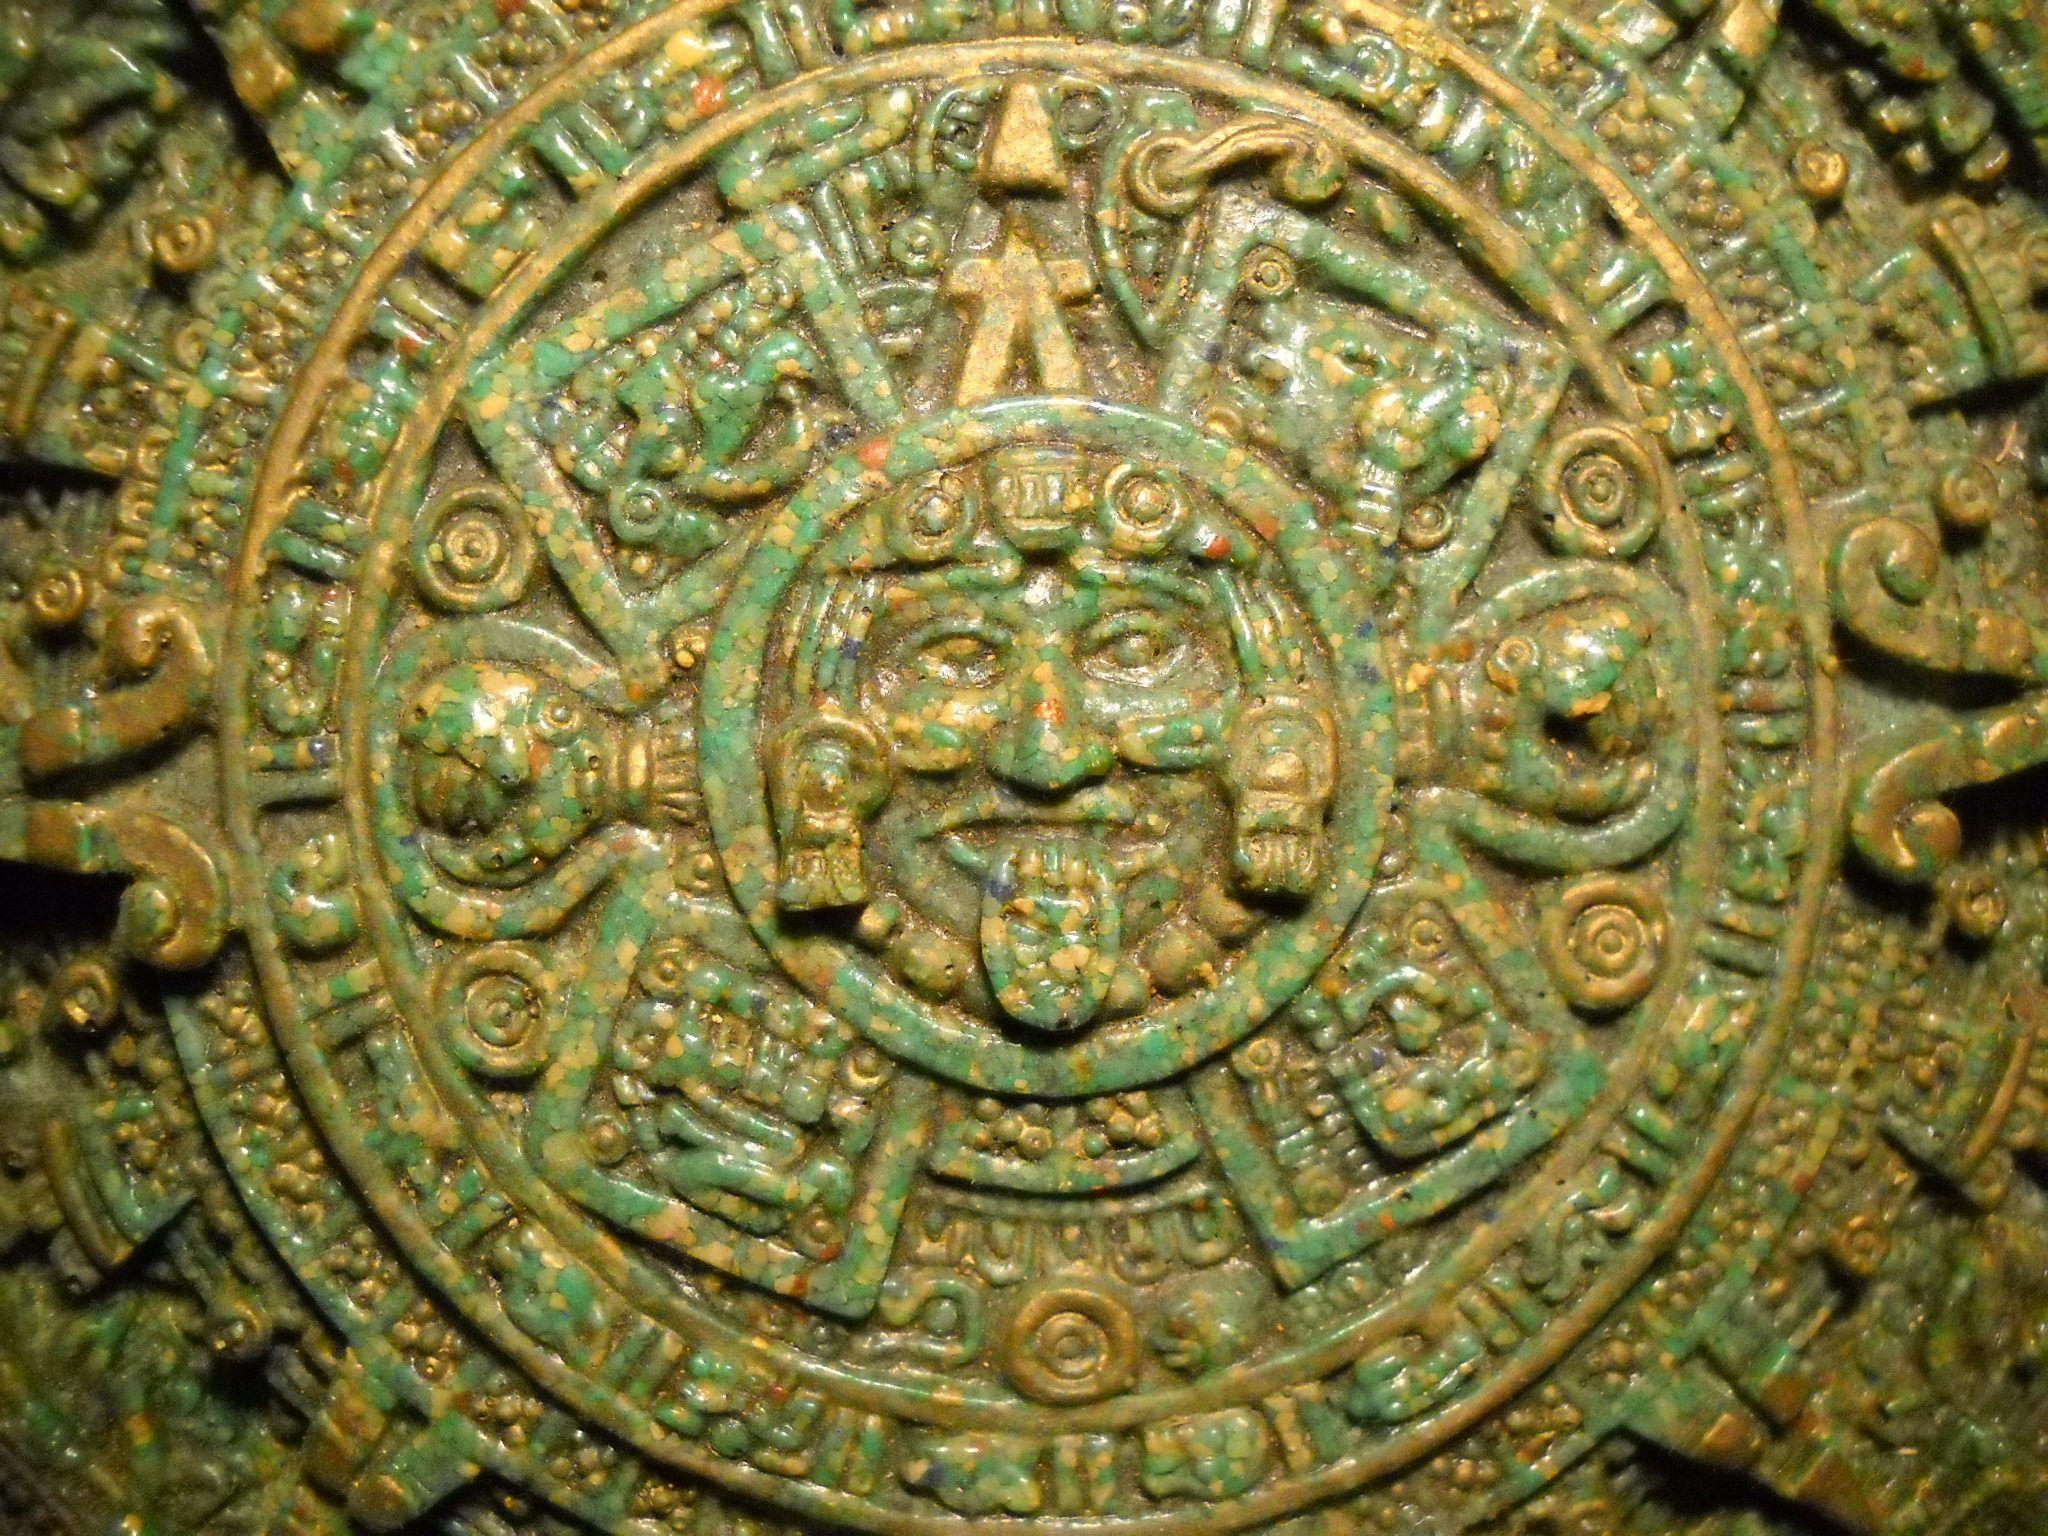 Ancient Aztec Wallpapers - Top Free Ancient Aztec Backgrounds ...